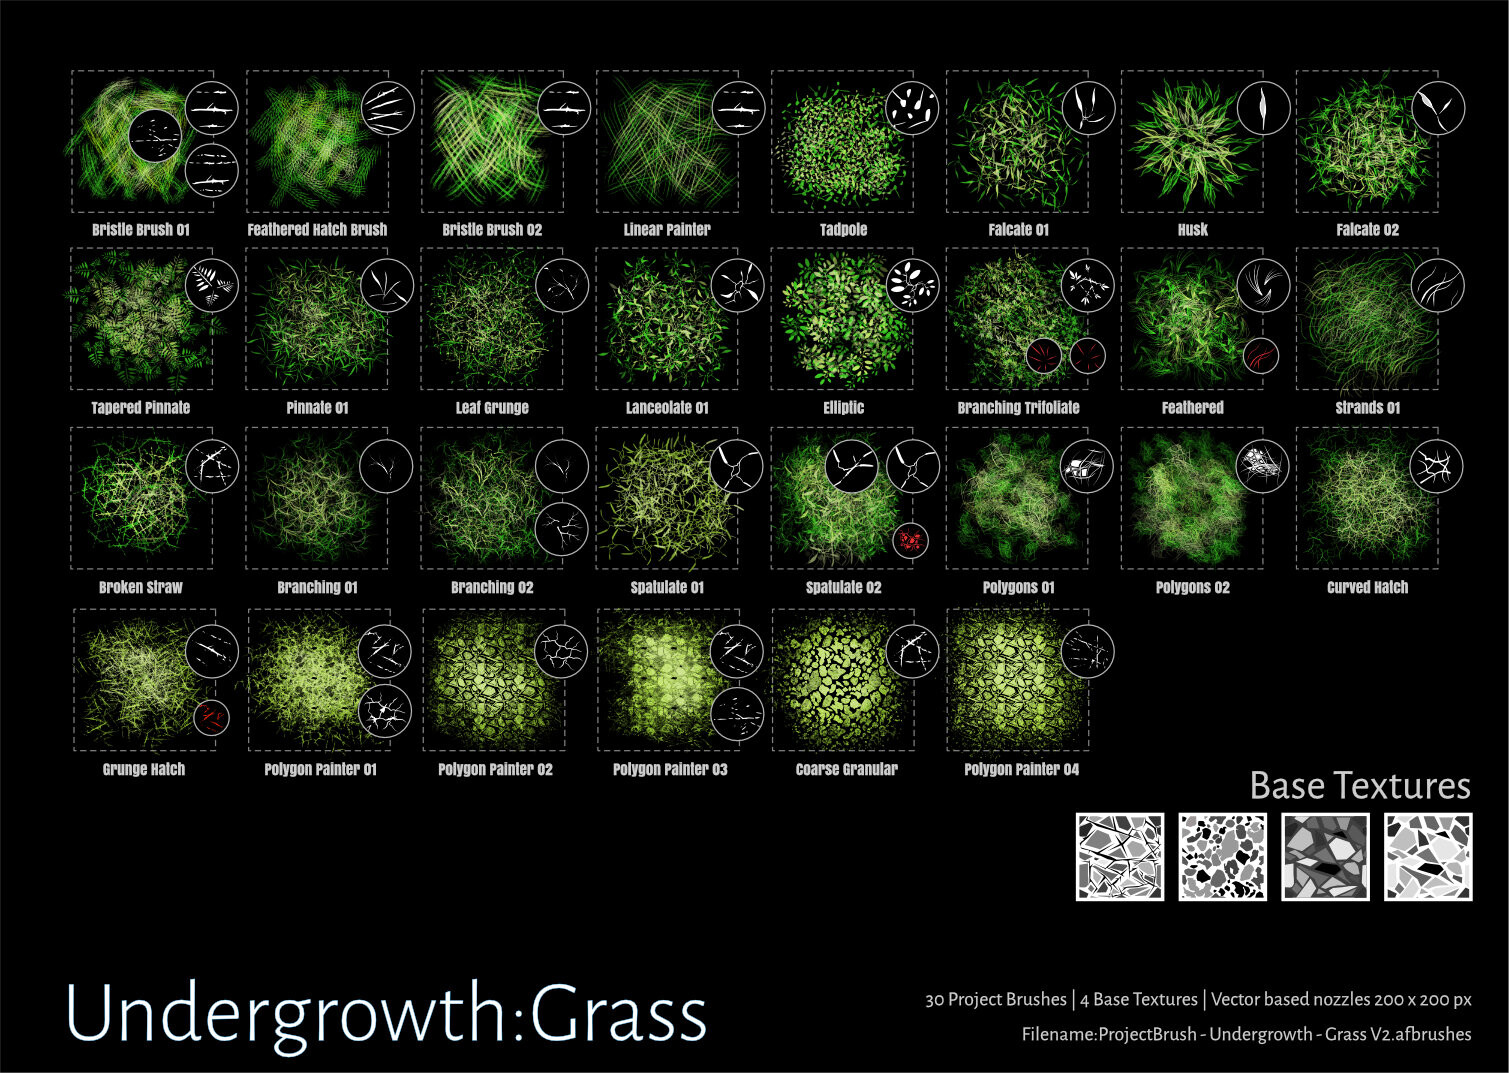 Undergrowth Grass
30 Raster Brushes